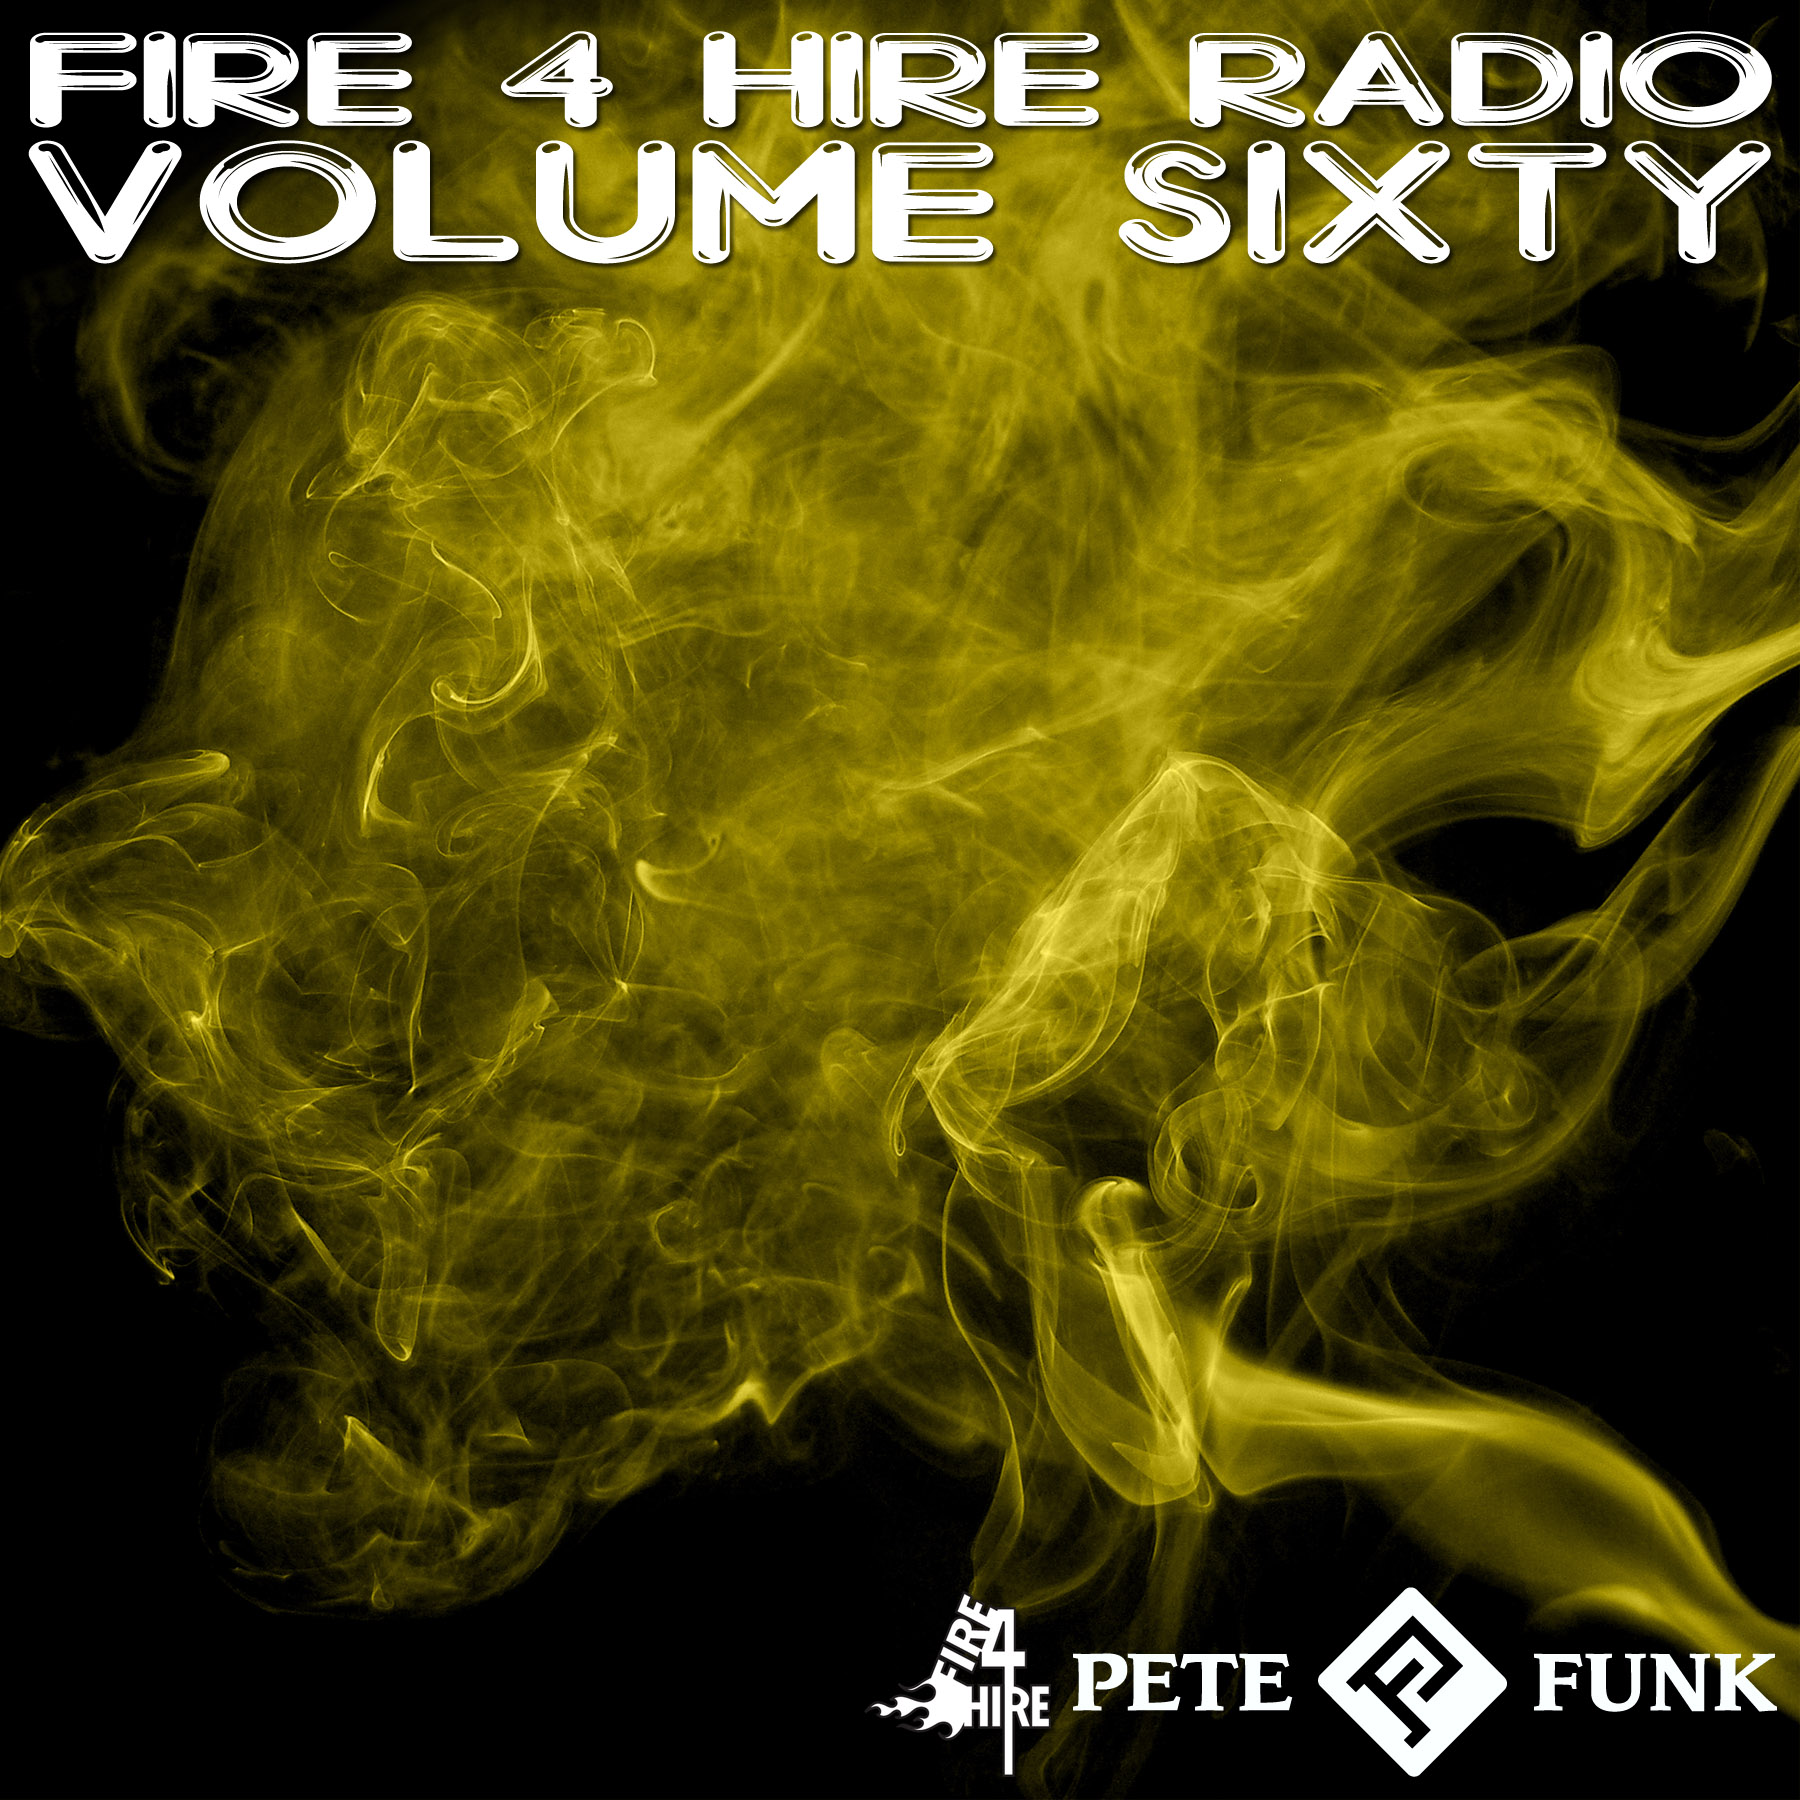 Fire 4 Hire RAdio Volume 60 Pete Funk Golden Era hip Hop